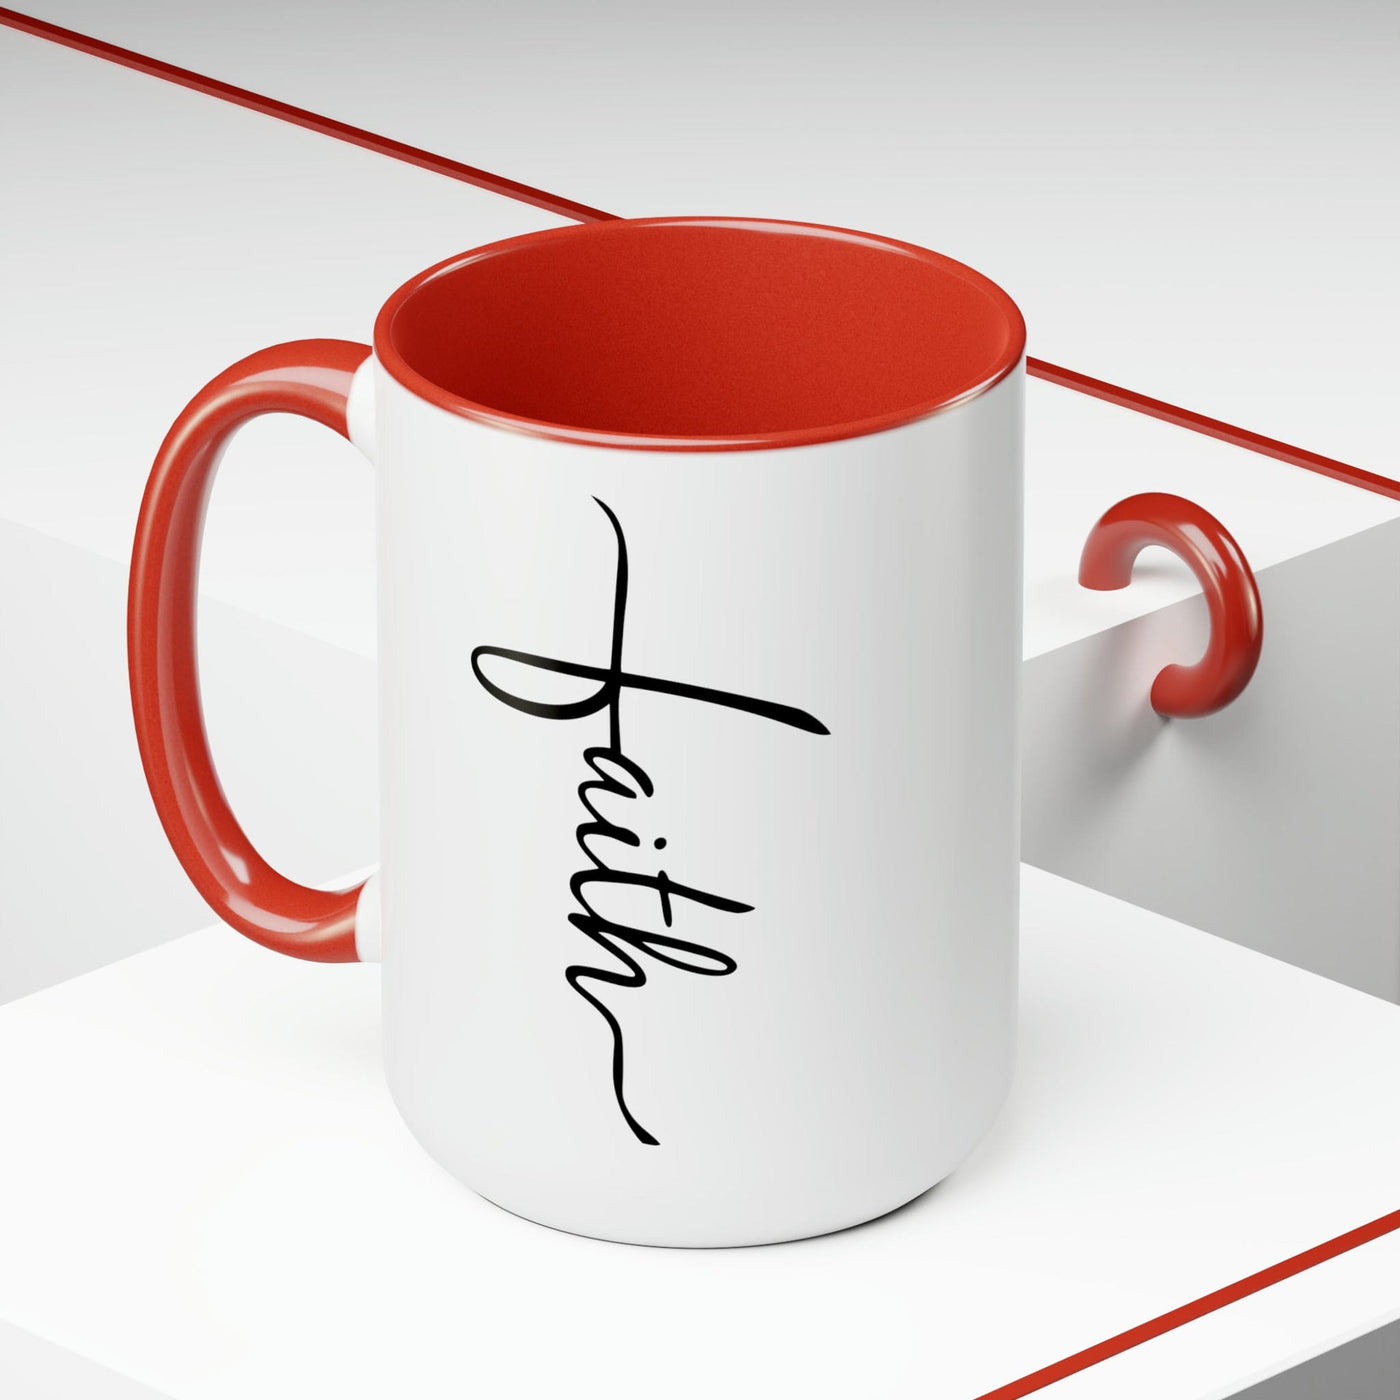 Accent Ceramic Coffee Mug 15oz - Faith Script Cross Black Illustration -